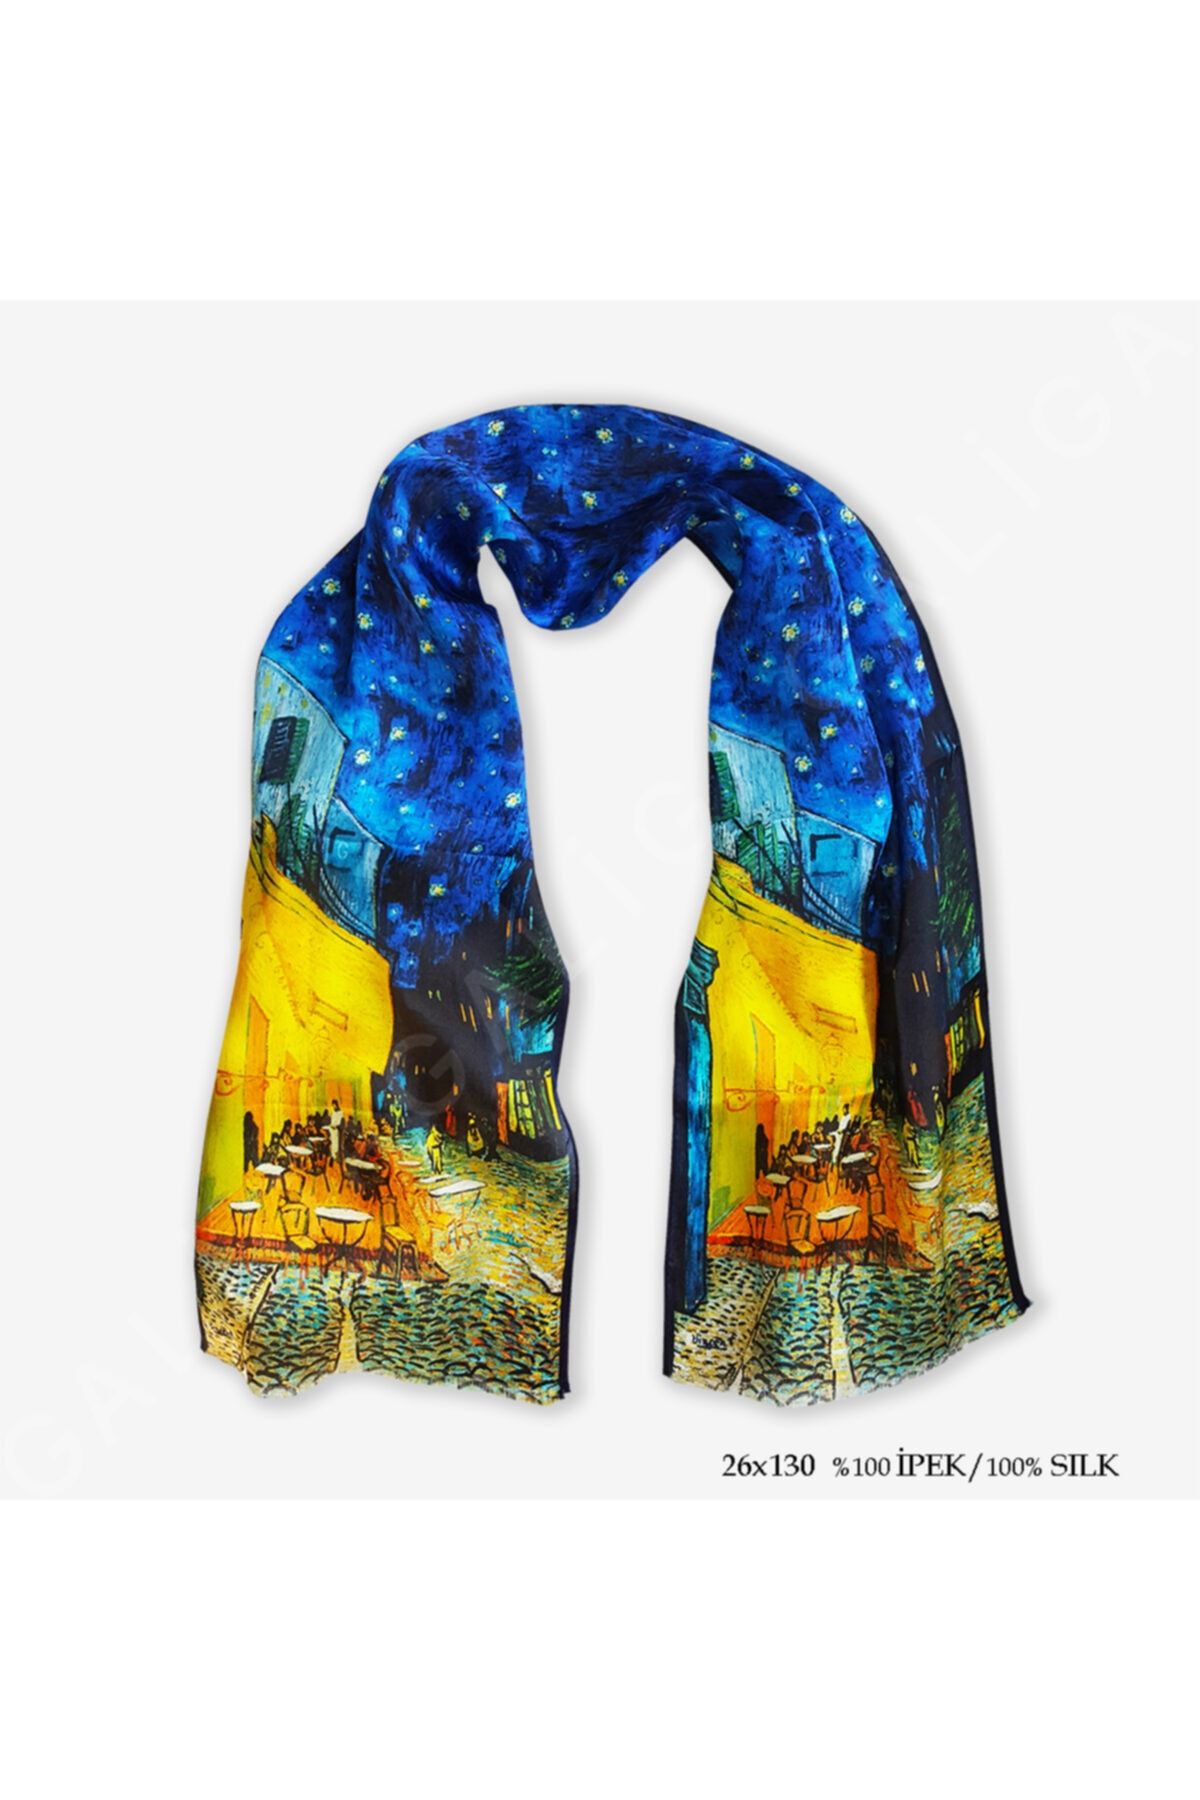 Galiga Van Gogh Cafe Terrace %100 Ipek Fular 26*130cm 'art On Silk'